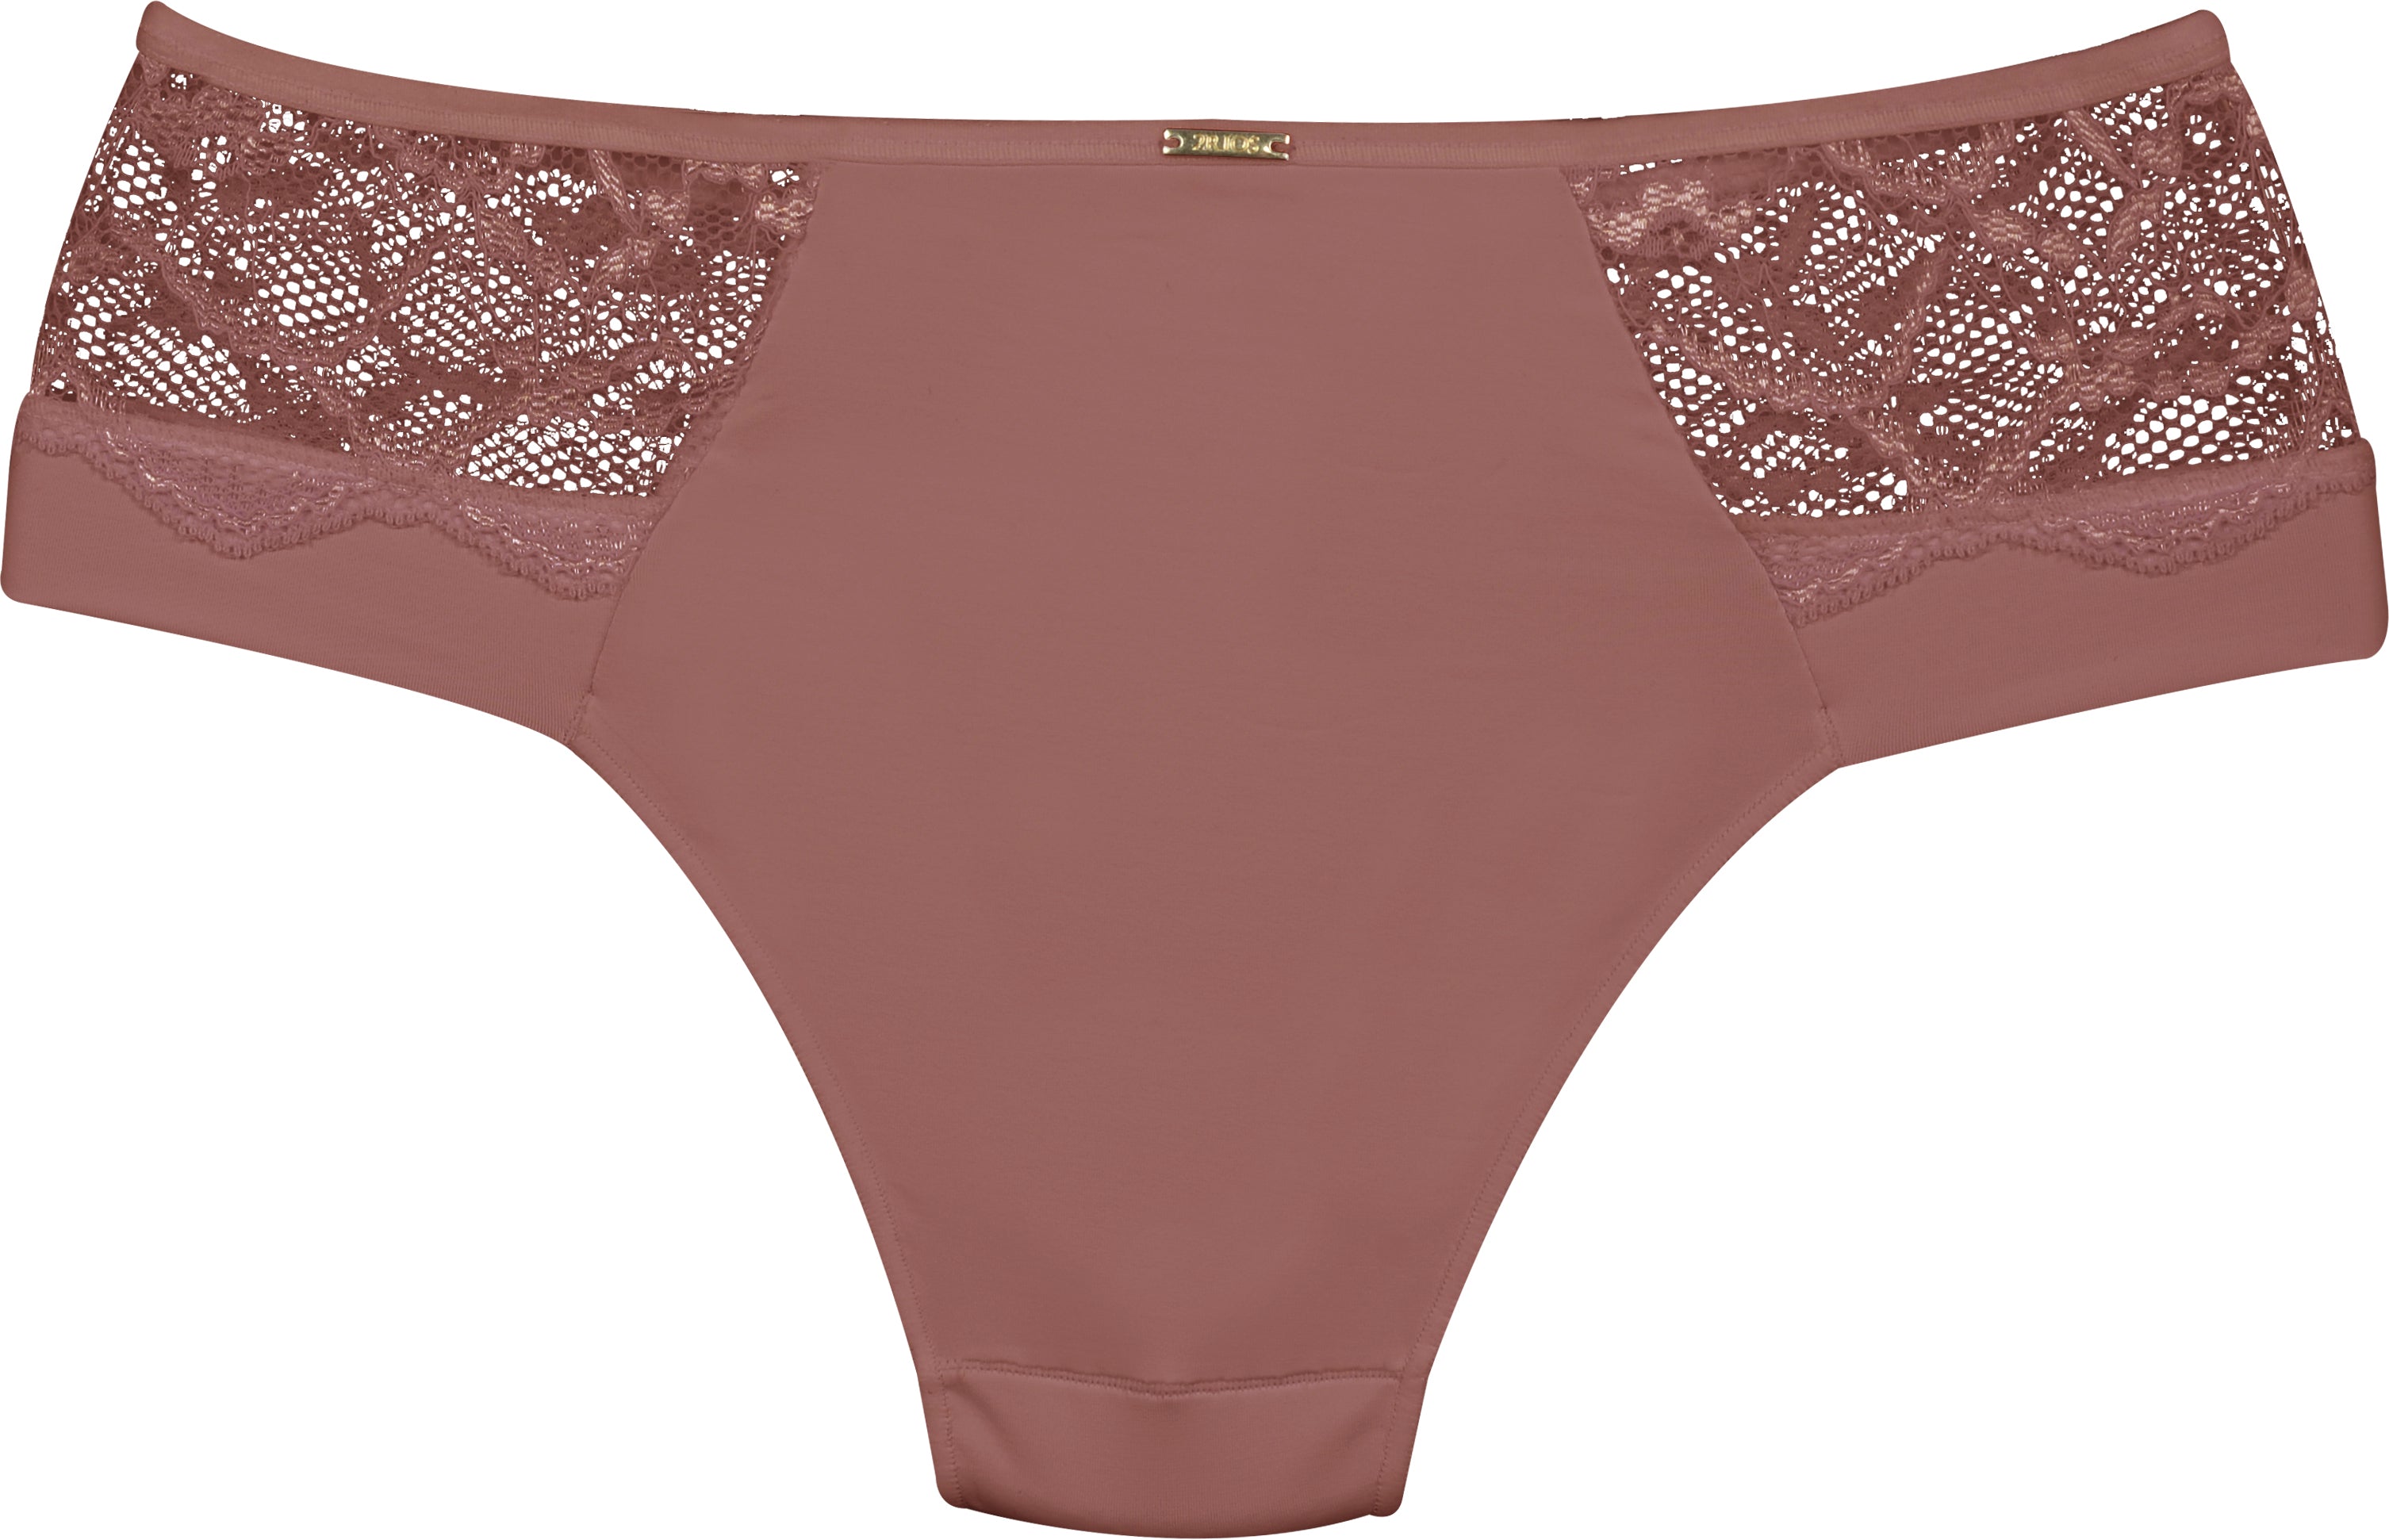 Bikini Microfiber Panty and Lace - 22169 – The BFF Company